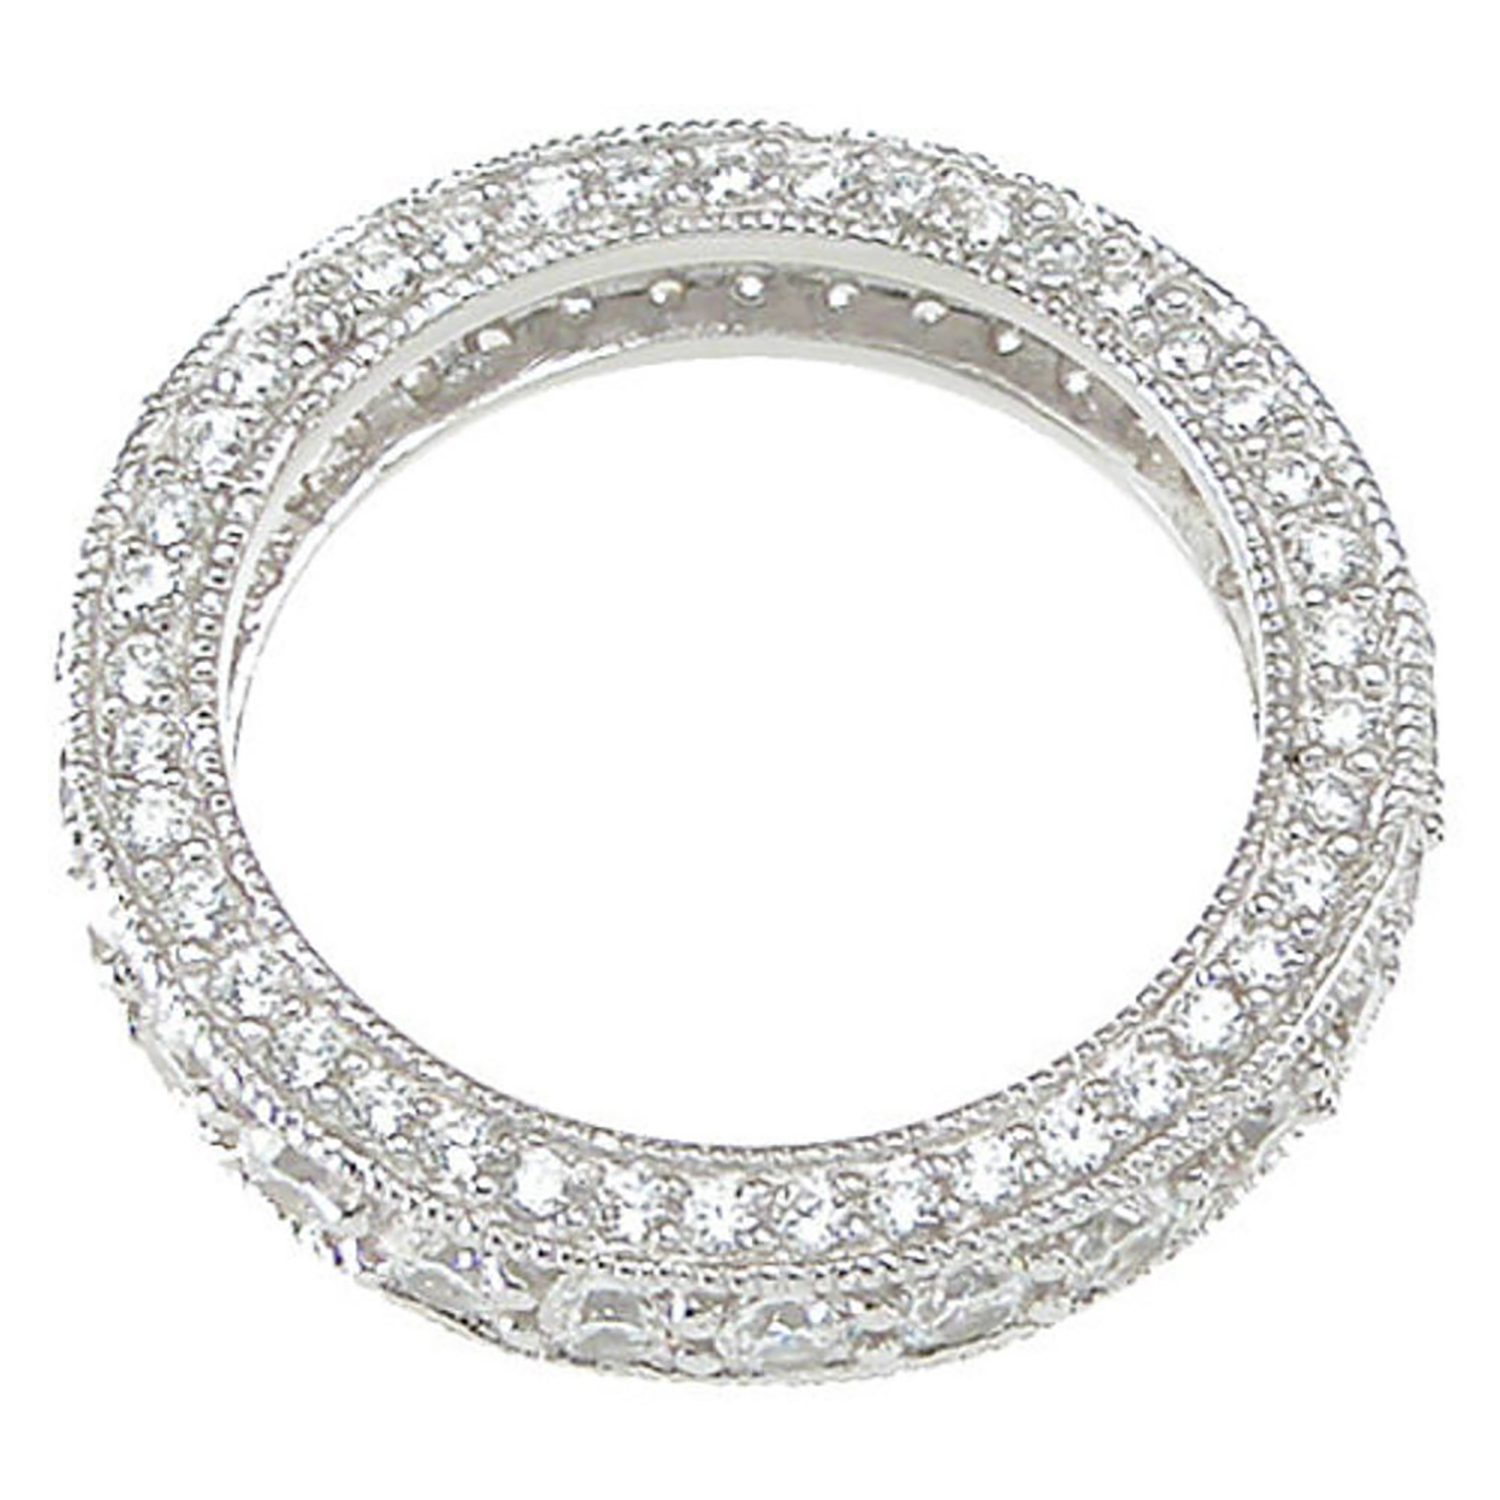 LaRaso Co CZ Wedding Band Eternity Anniversary Ring for Women Size 9 - image 3 of 4